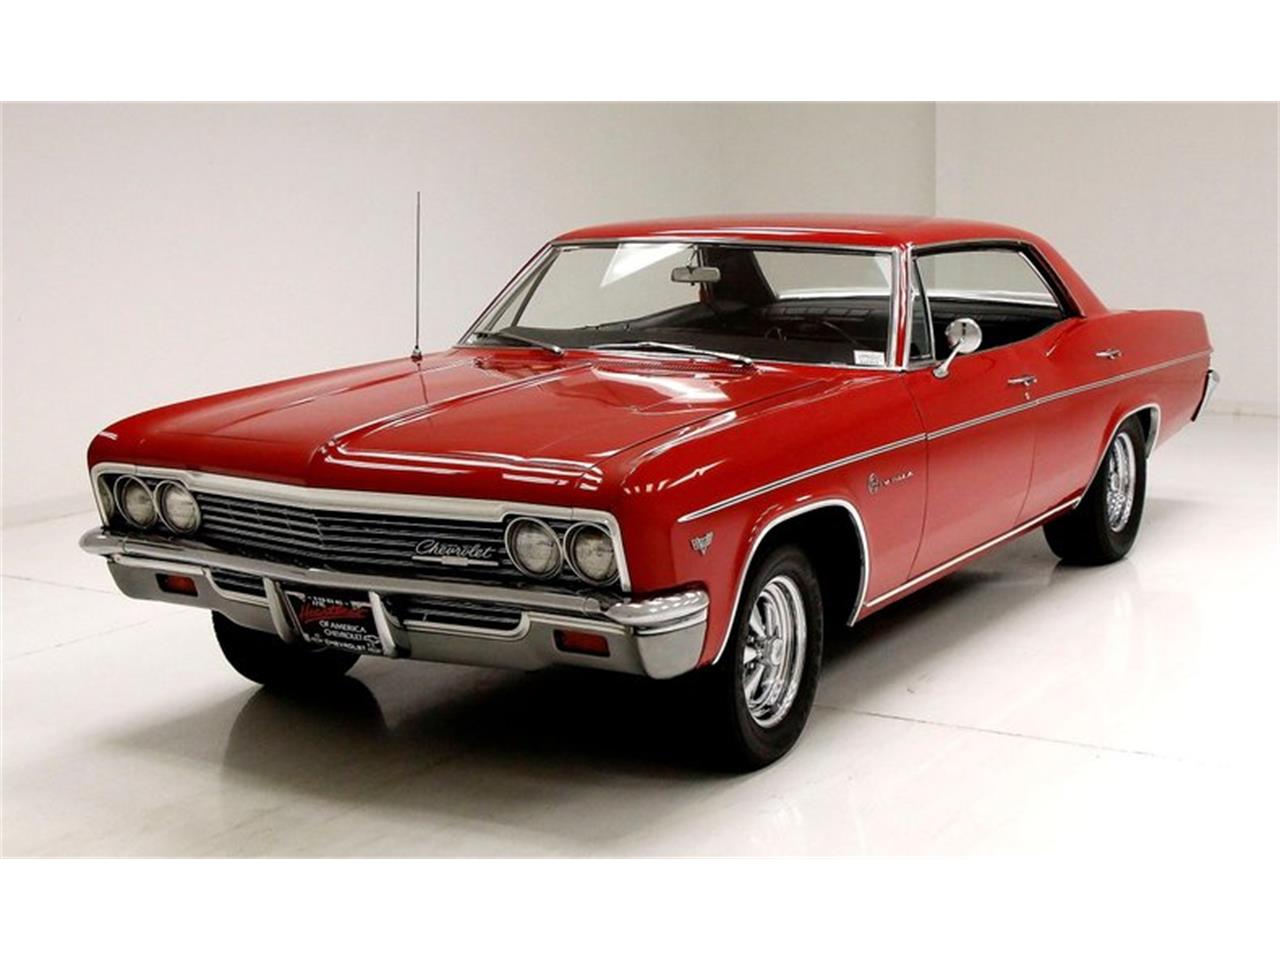 For Sale: 1966 Chevrolet Impala in Morgantown, Pennsylvania.